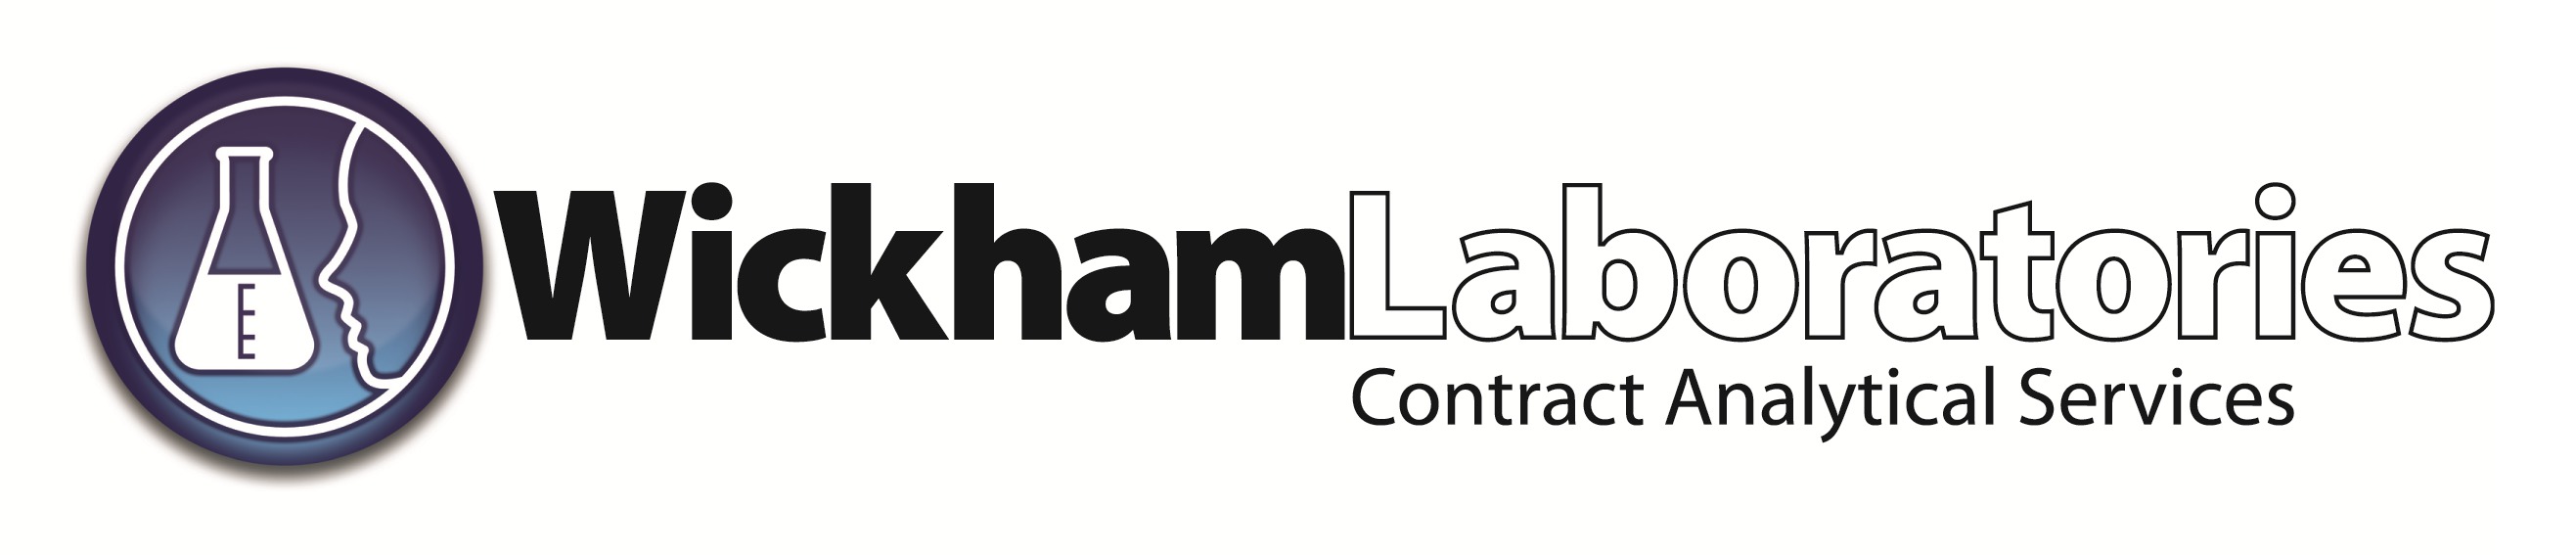 Wickham Laboratories announces successful MHRA GMP inspection 